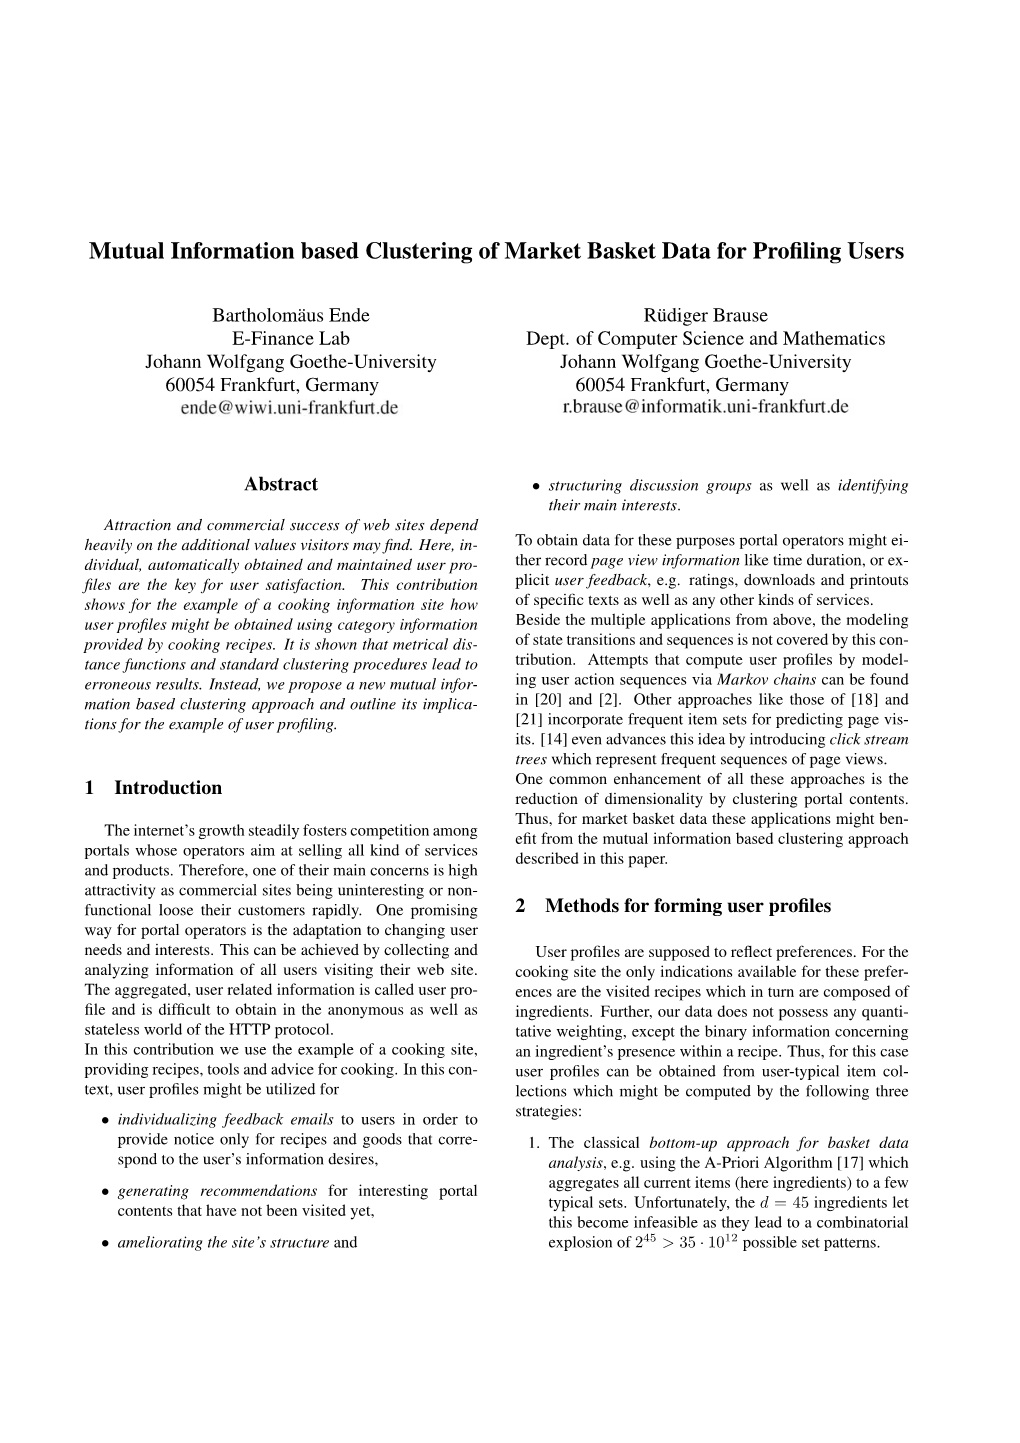 Mutual Information Based Clustering of Market Basket Data for Profiling